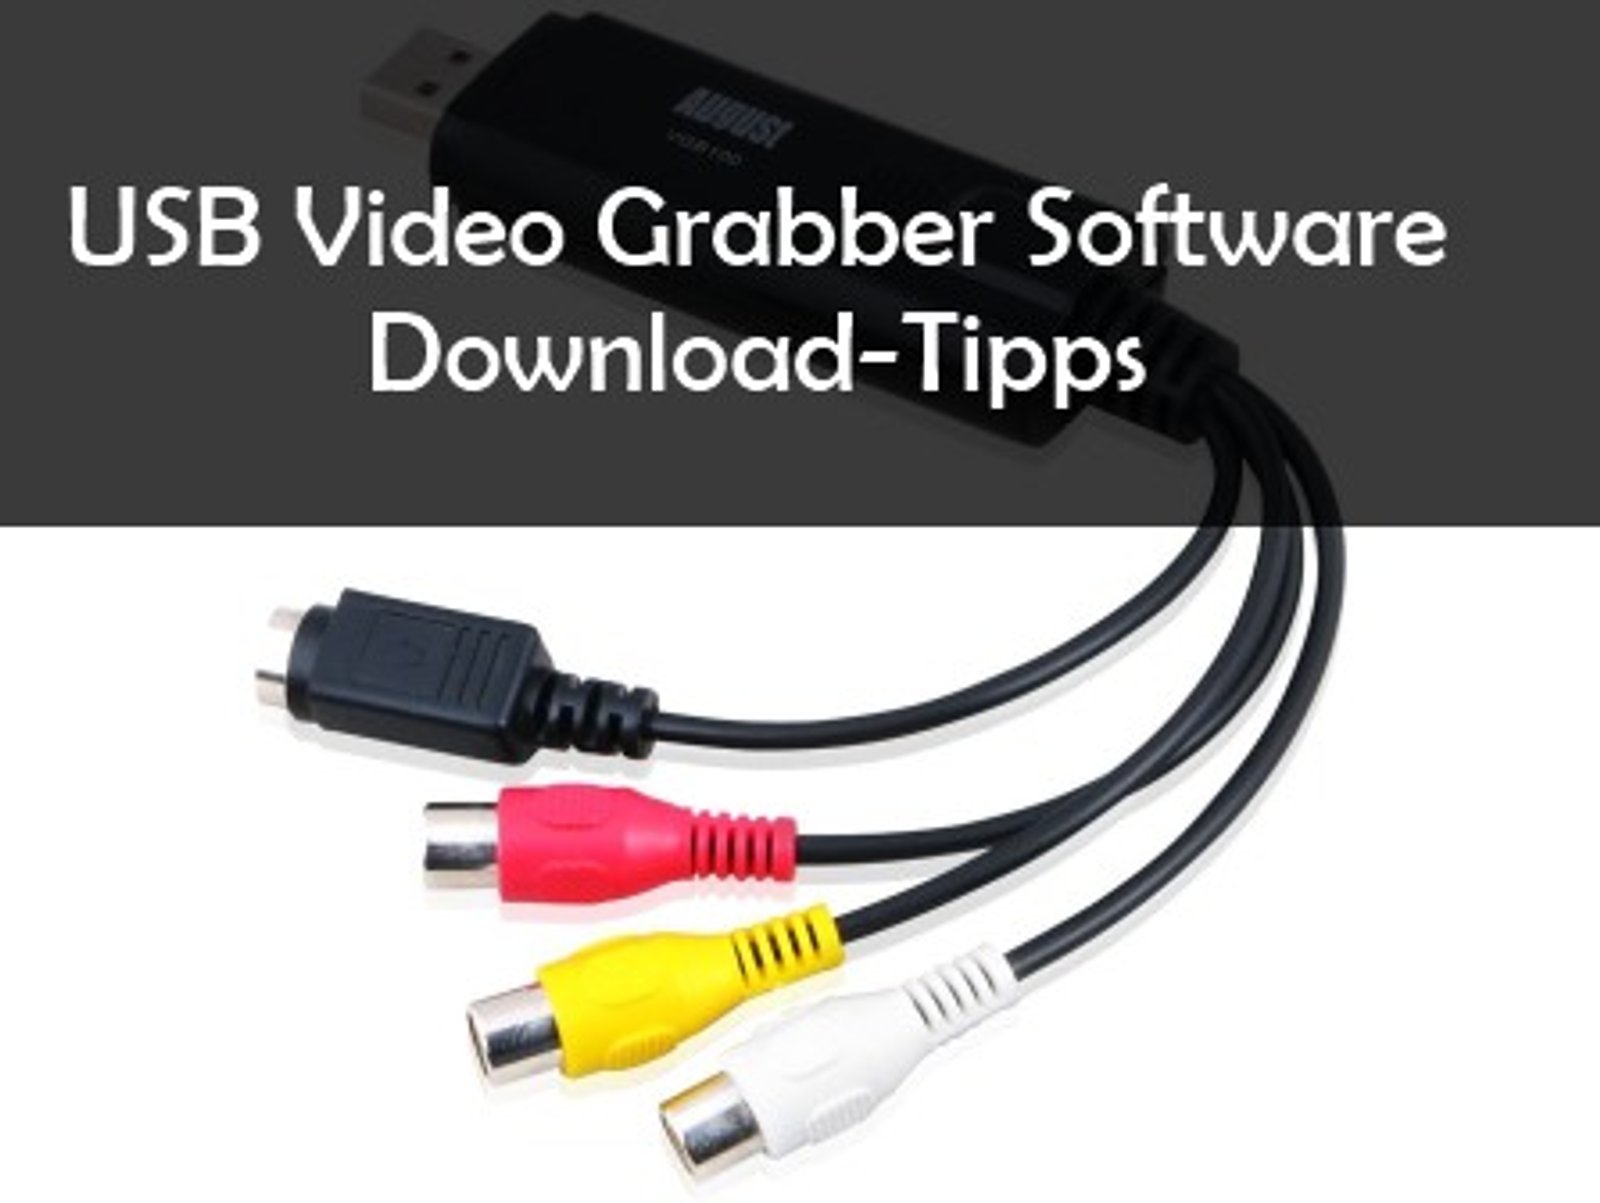 Ez Grabber. Grab (software). EASYCAP 4 программа. USB ez Grabber. Easier cap usb 2.0